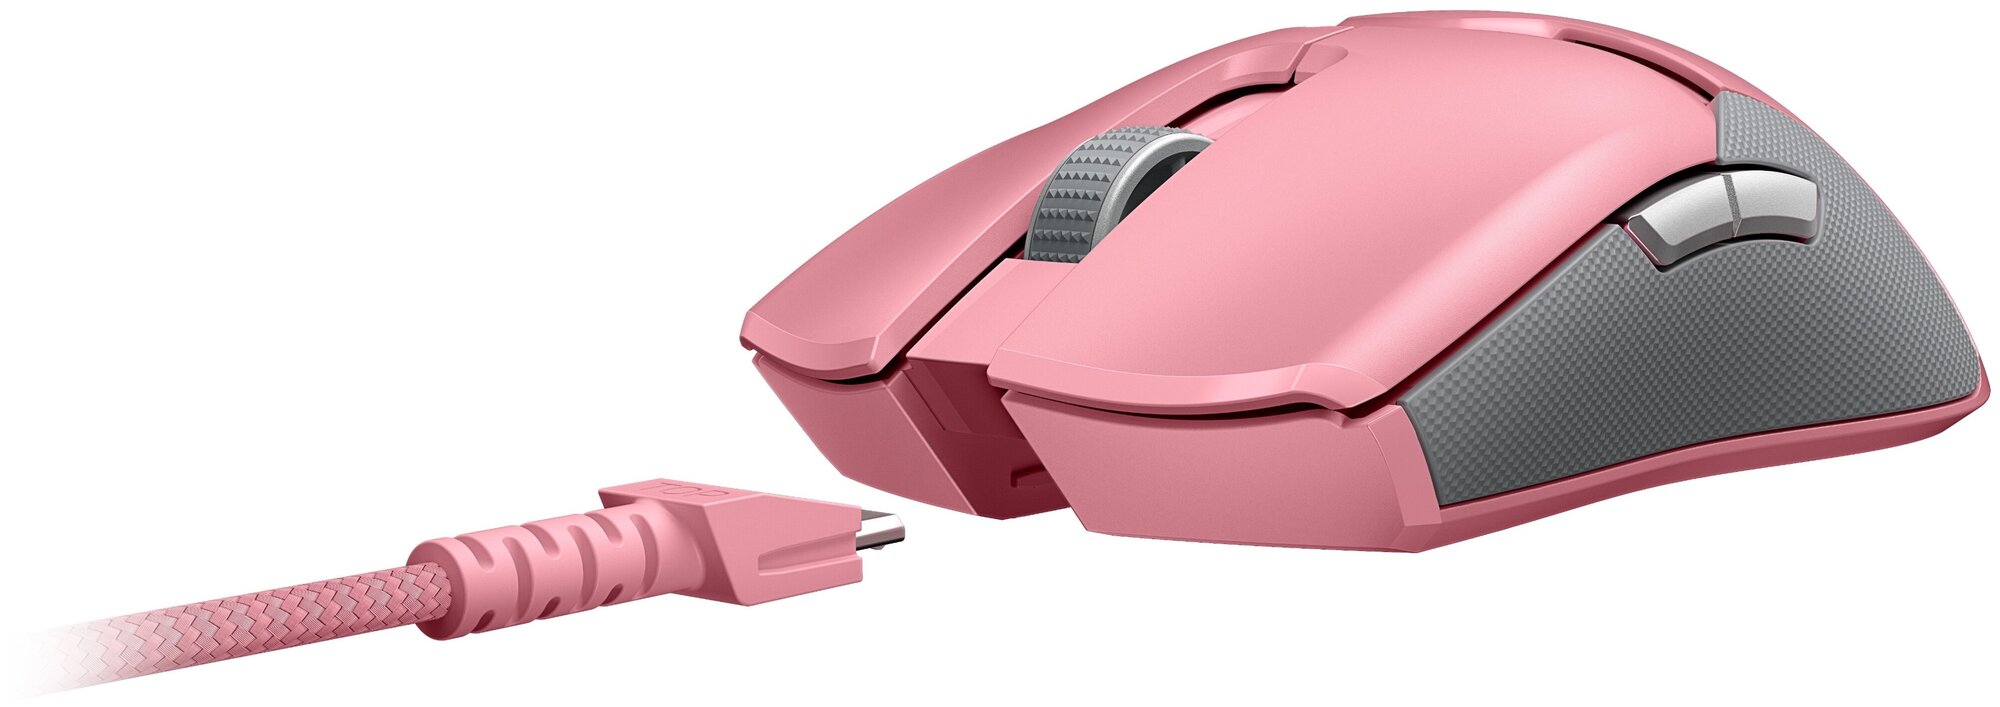 Razer viper ultimate pink finder iphone